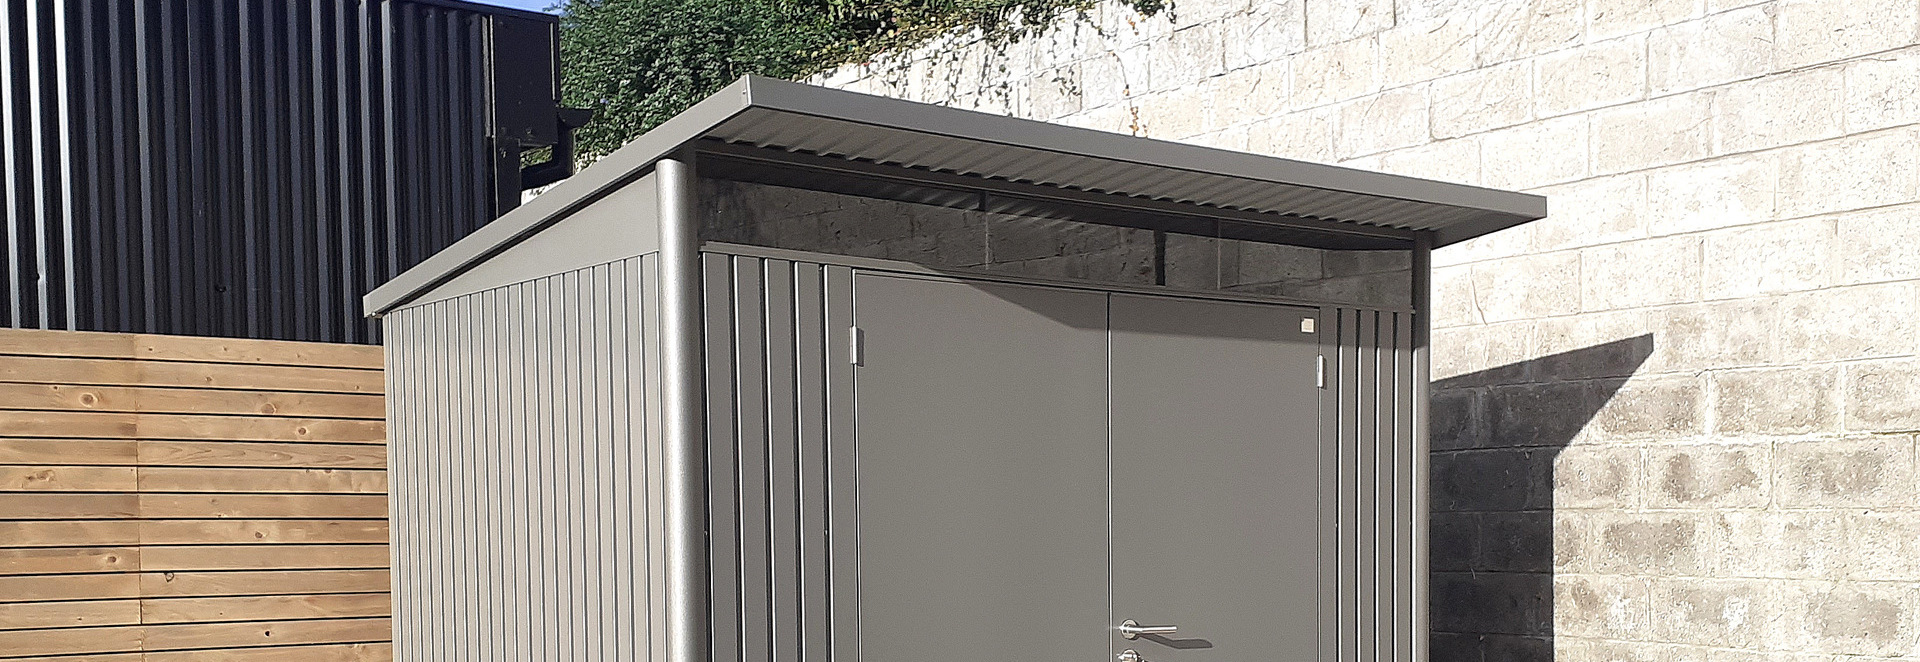 Biohort AvantGarde A5 Garden Shed  in metallic quartz grey, with optional accessories including double doors, aluminium floor frame, aluminium floor panels | Supplied + Installation in Drumcondra, Dublin 9  | Owen Chubb Ireland's # 1 Biohort Dealer